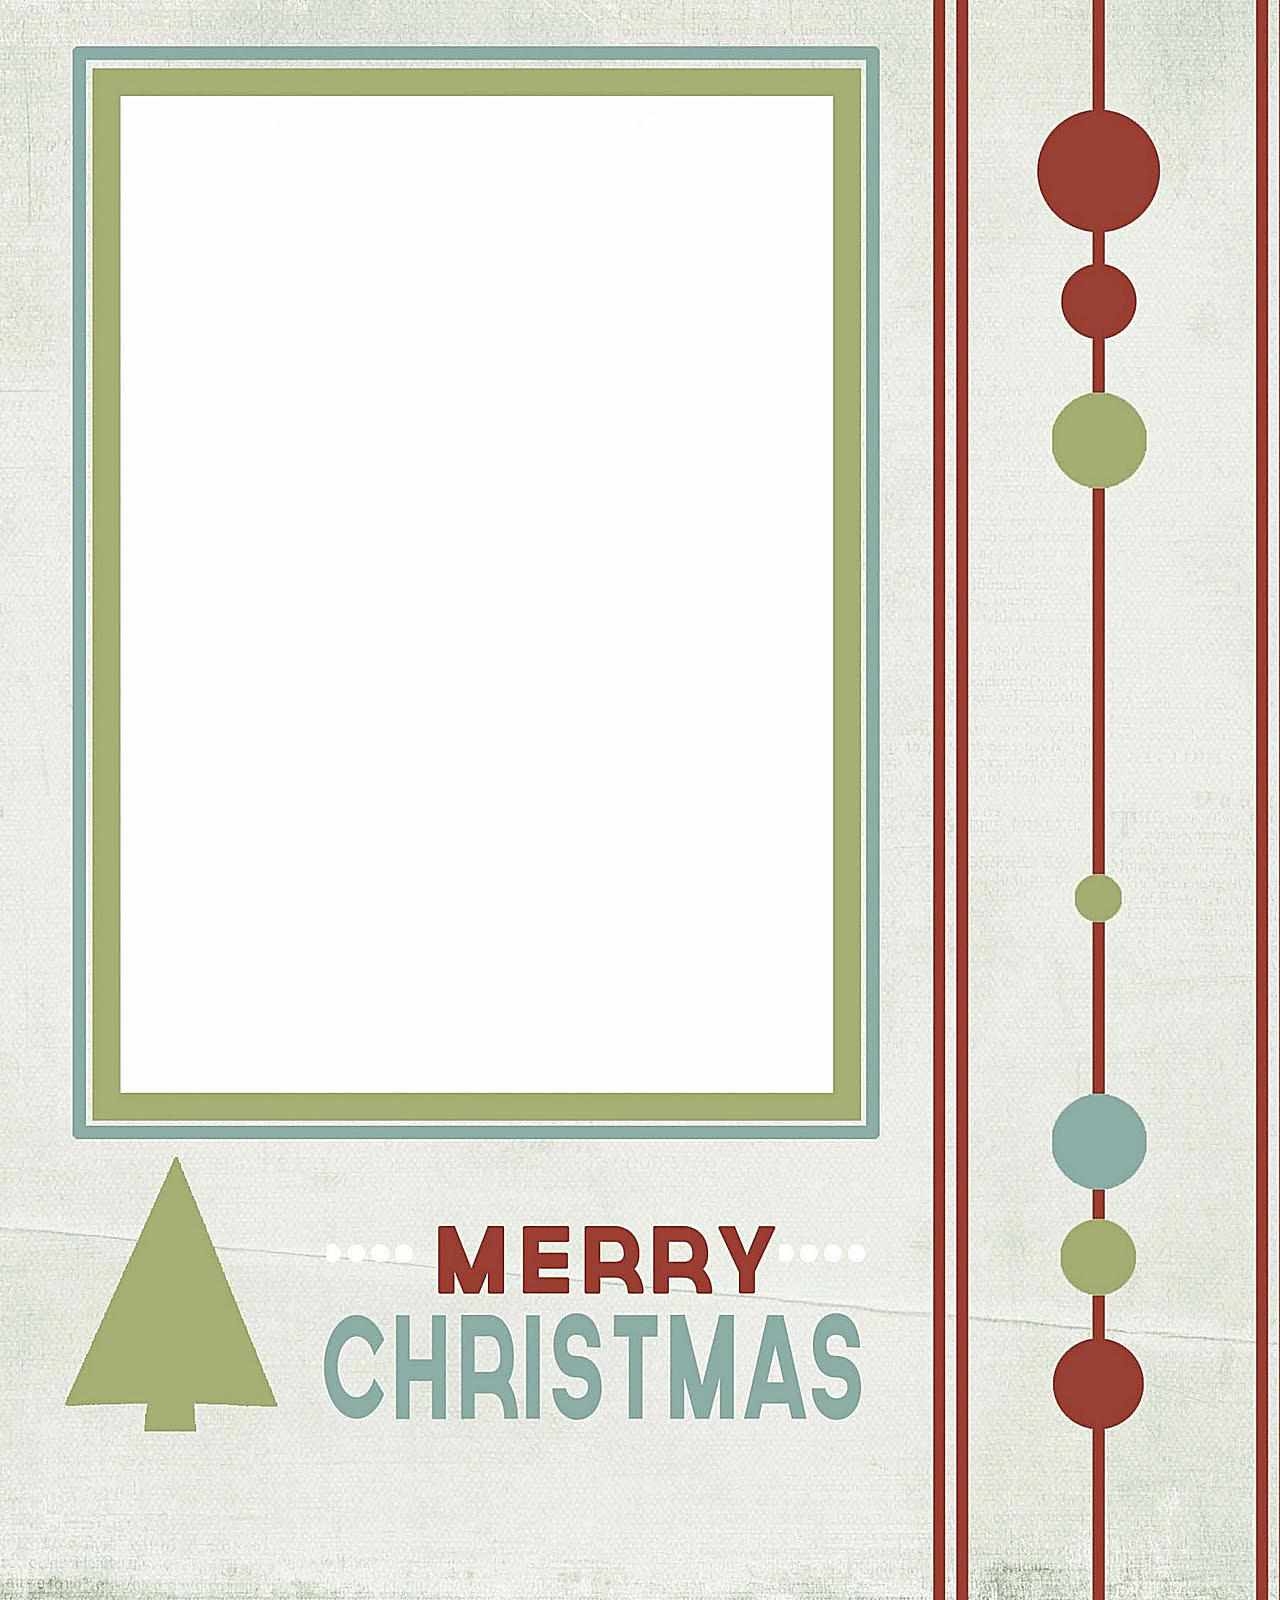 10 Free Templates For Christmas Photo Cards - Free Printable Christmas Card Templates